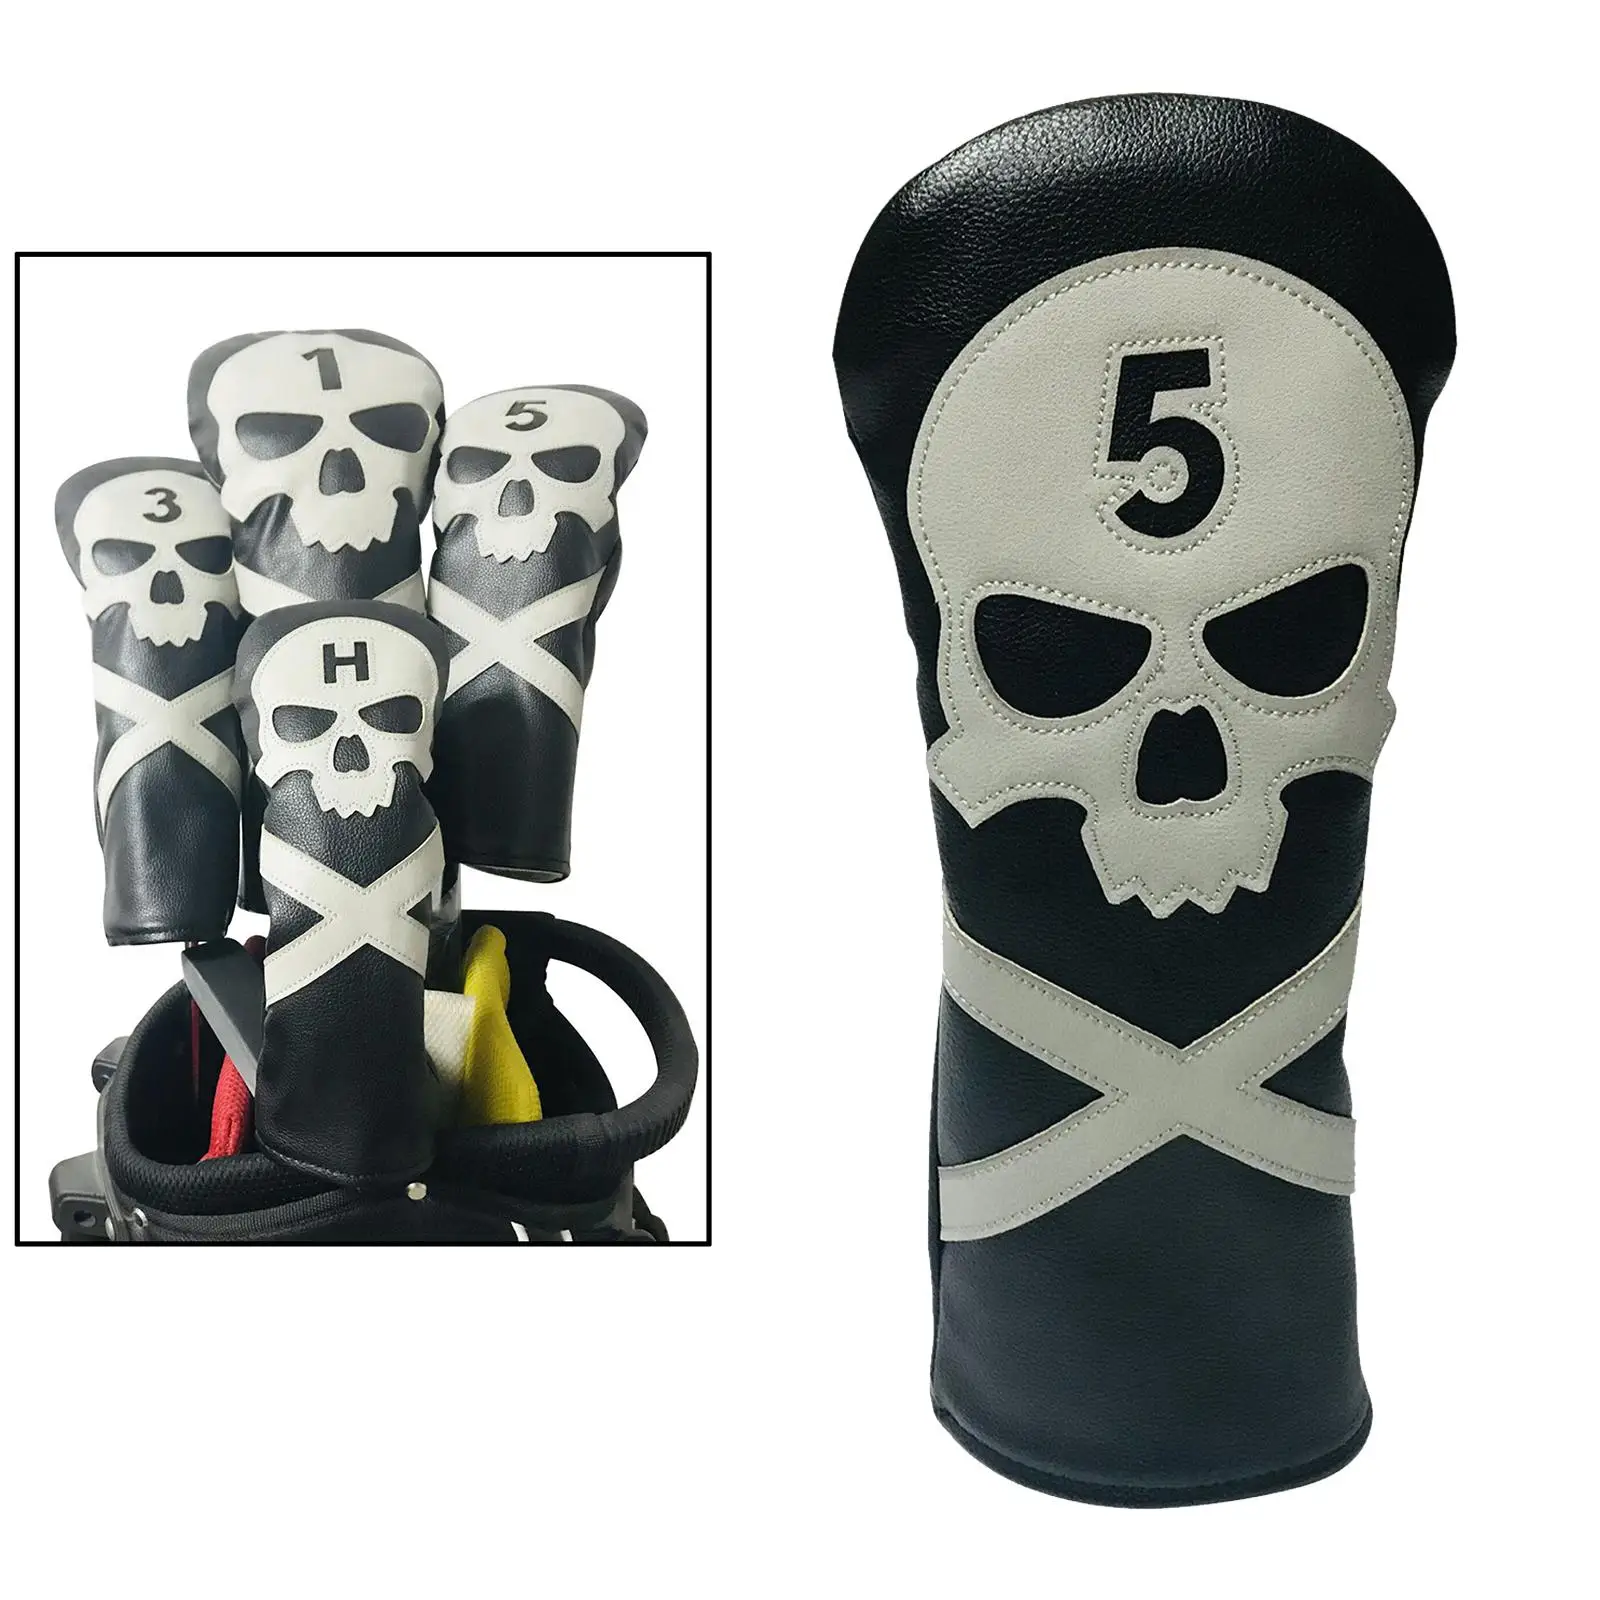  Covers,  3 5 UT Driver  Woods   with Elastic Closure, Waterproof Skull PU Leather, Golfer Equipment